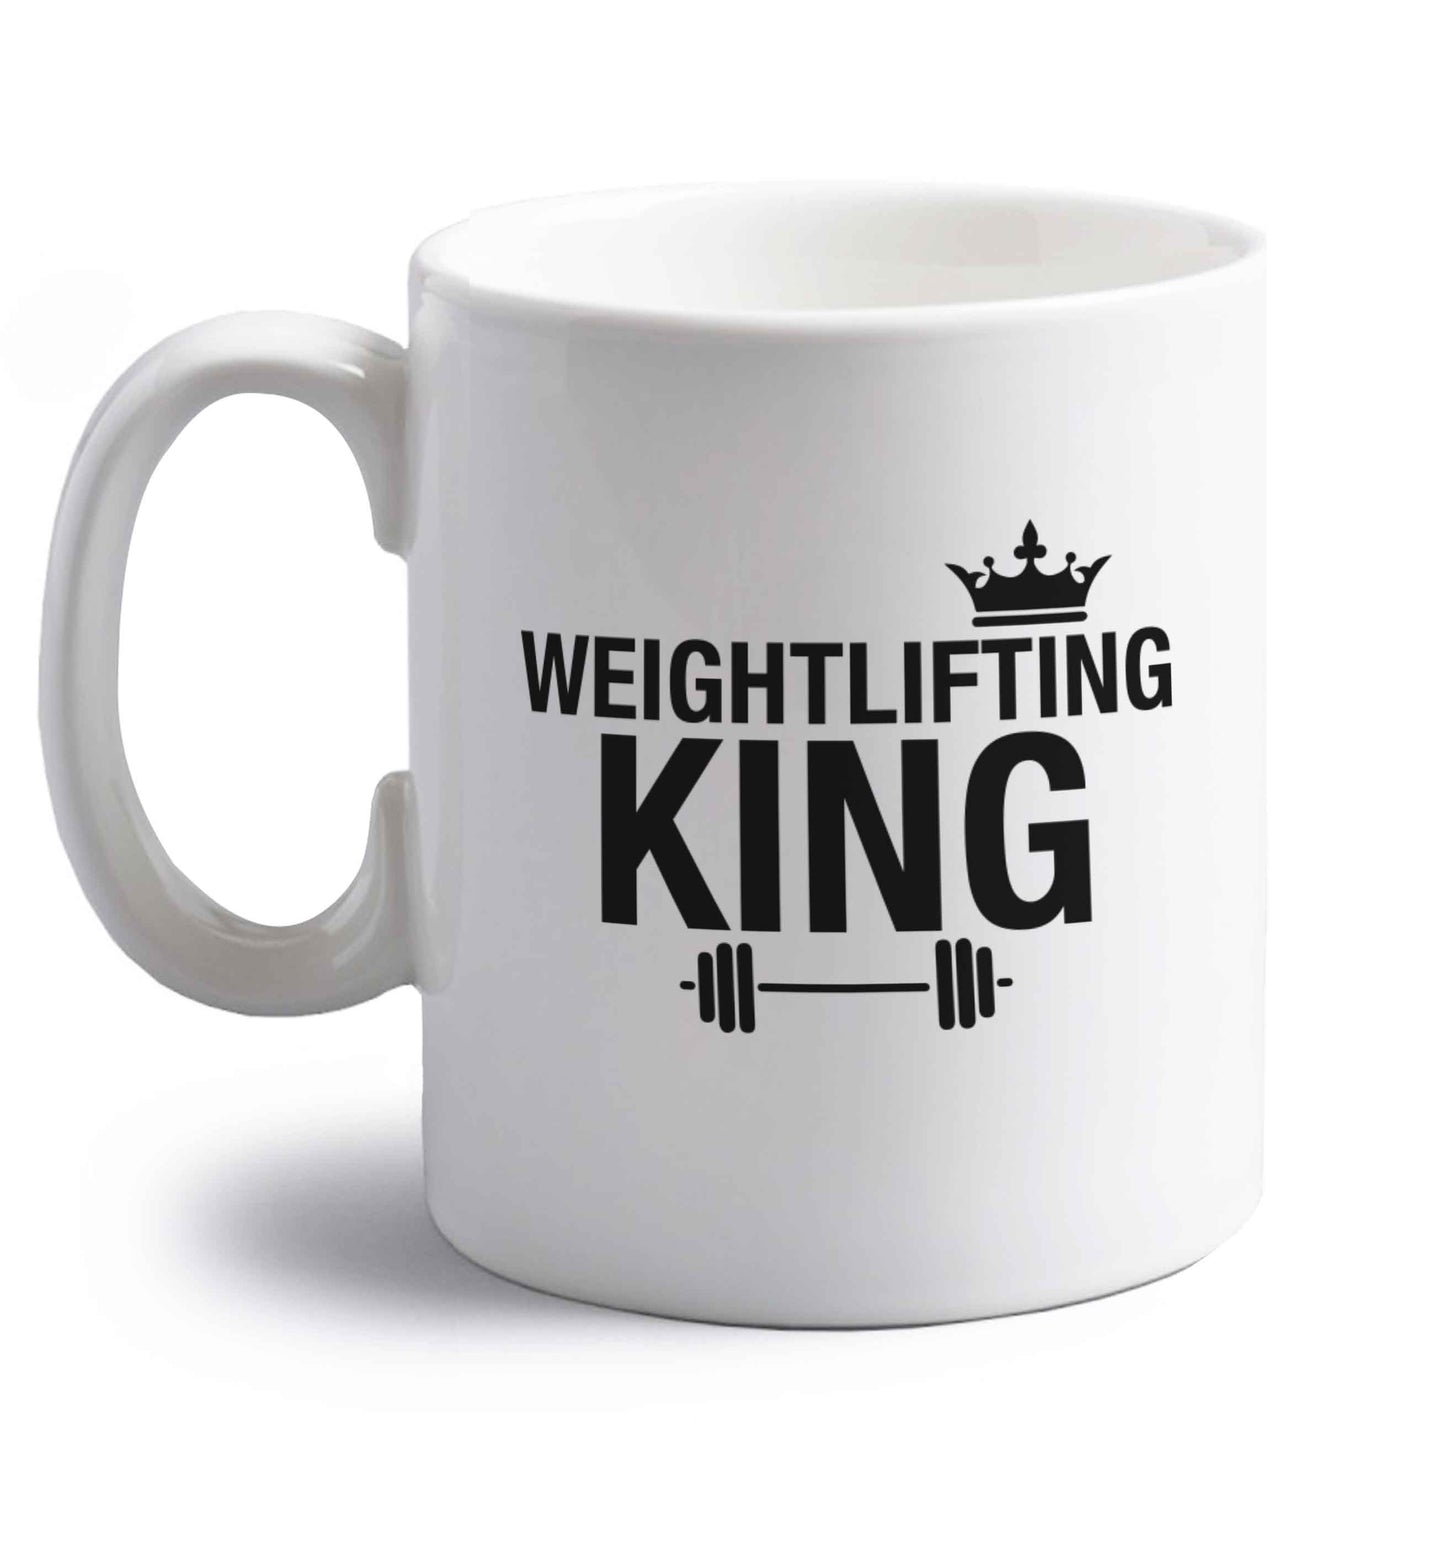 Weightlifting king right handed white ceramic mug 